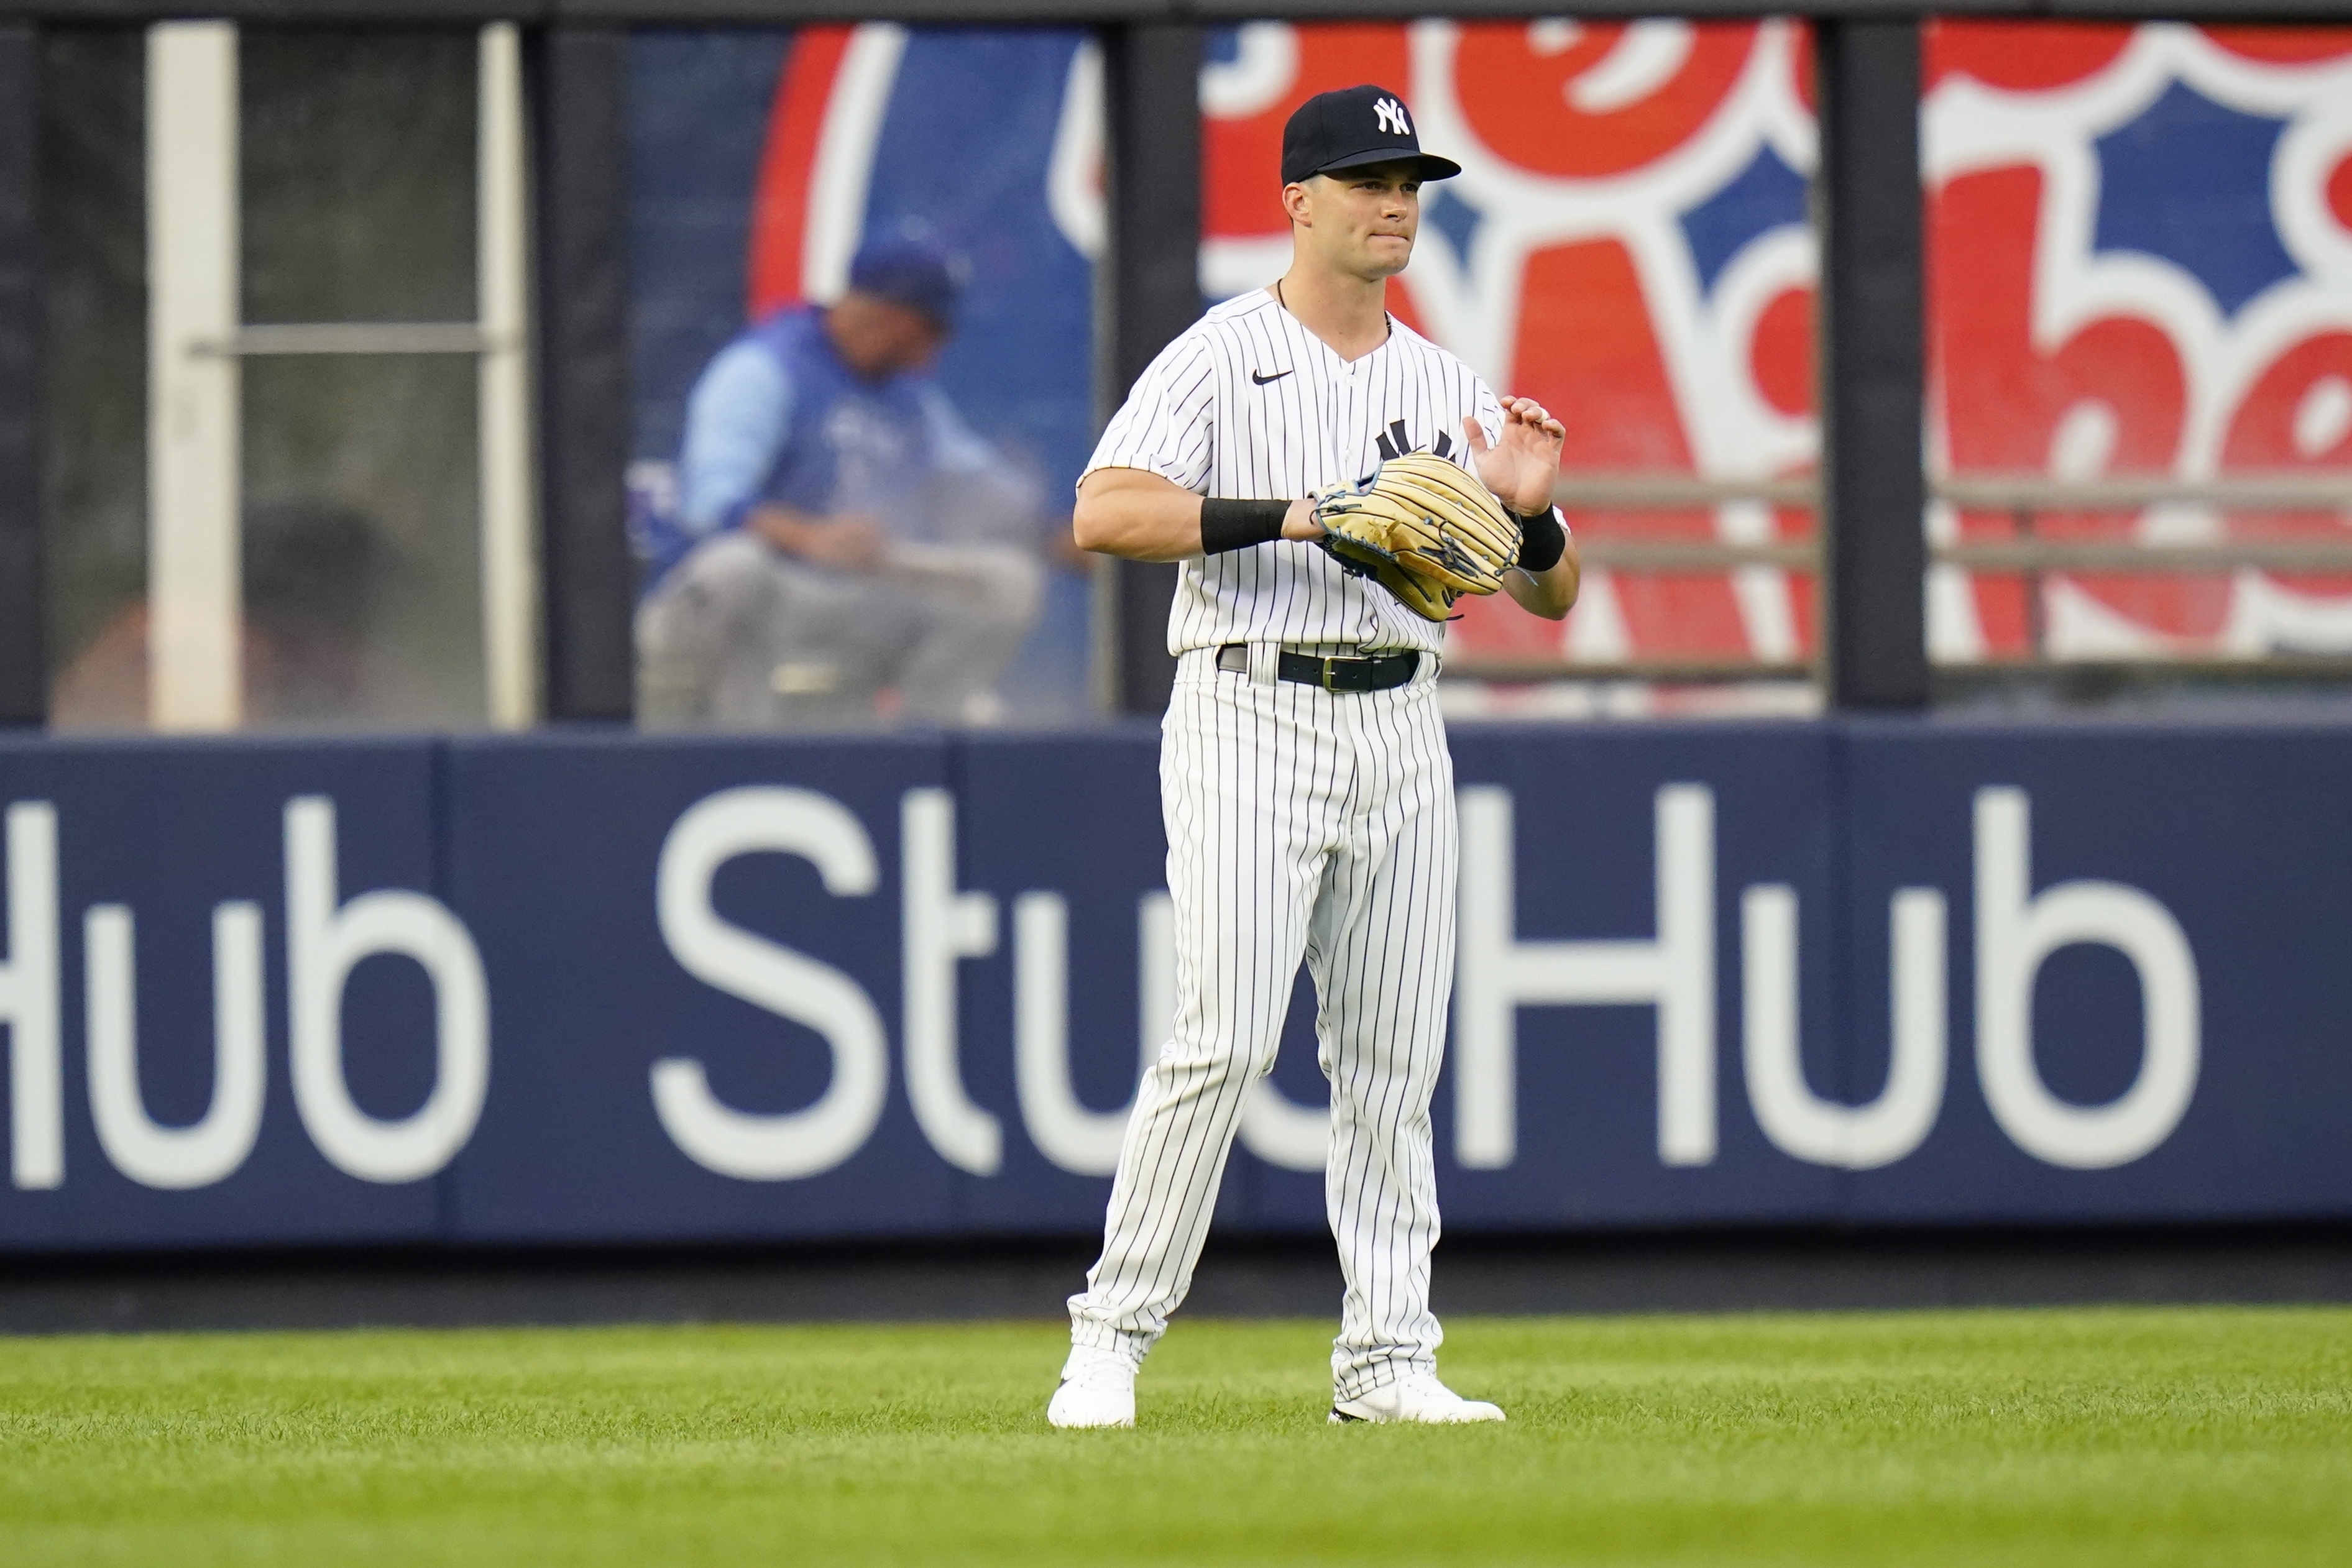 Ex-Yankee Andrew Benintendi: 'Where I should be' with White Sox